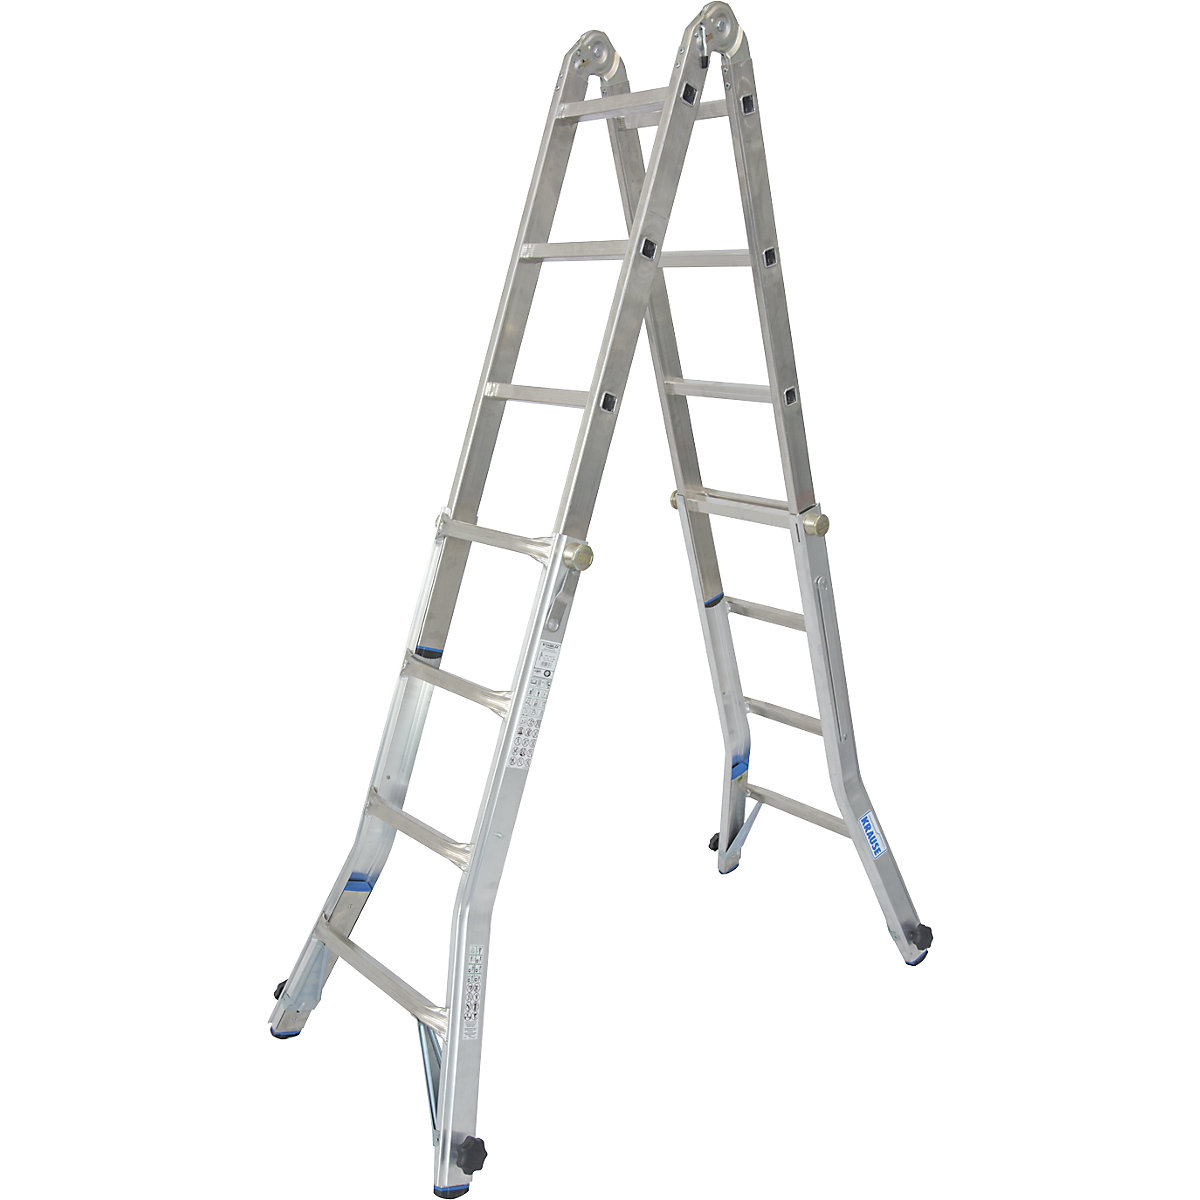 Hinged telescopic ladder - KRAUSE